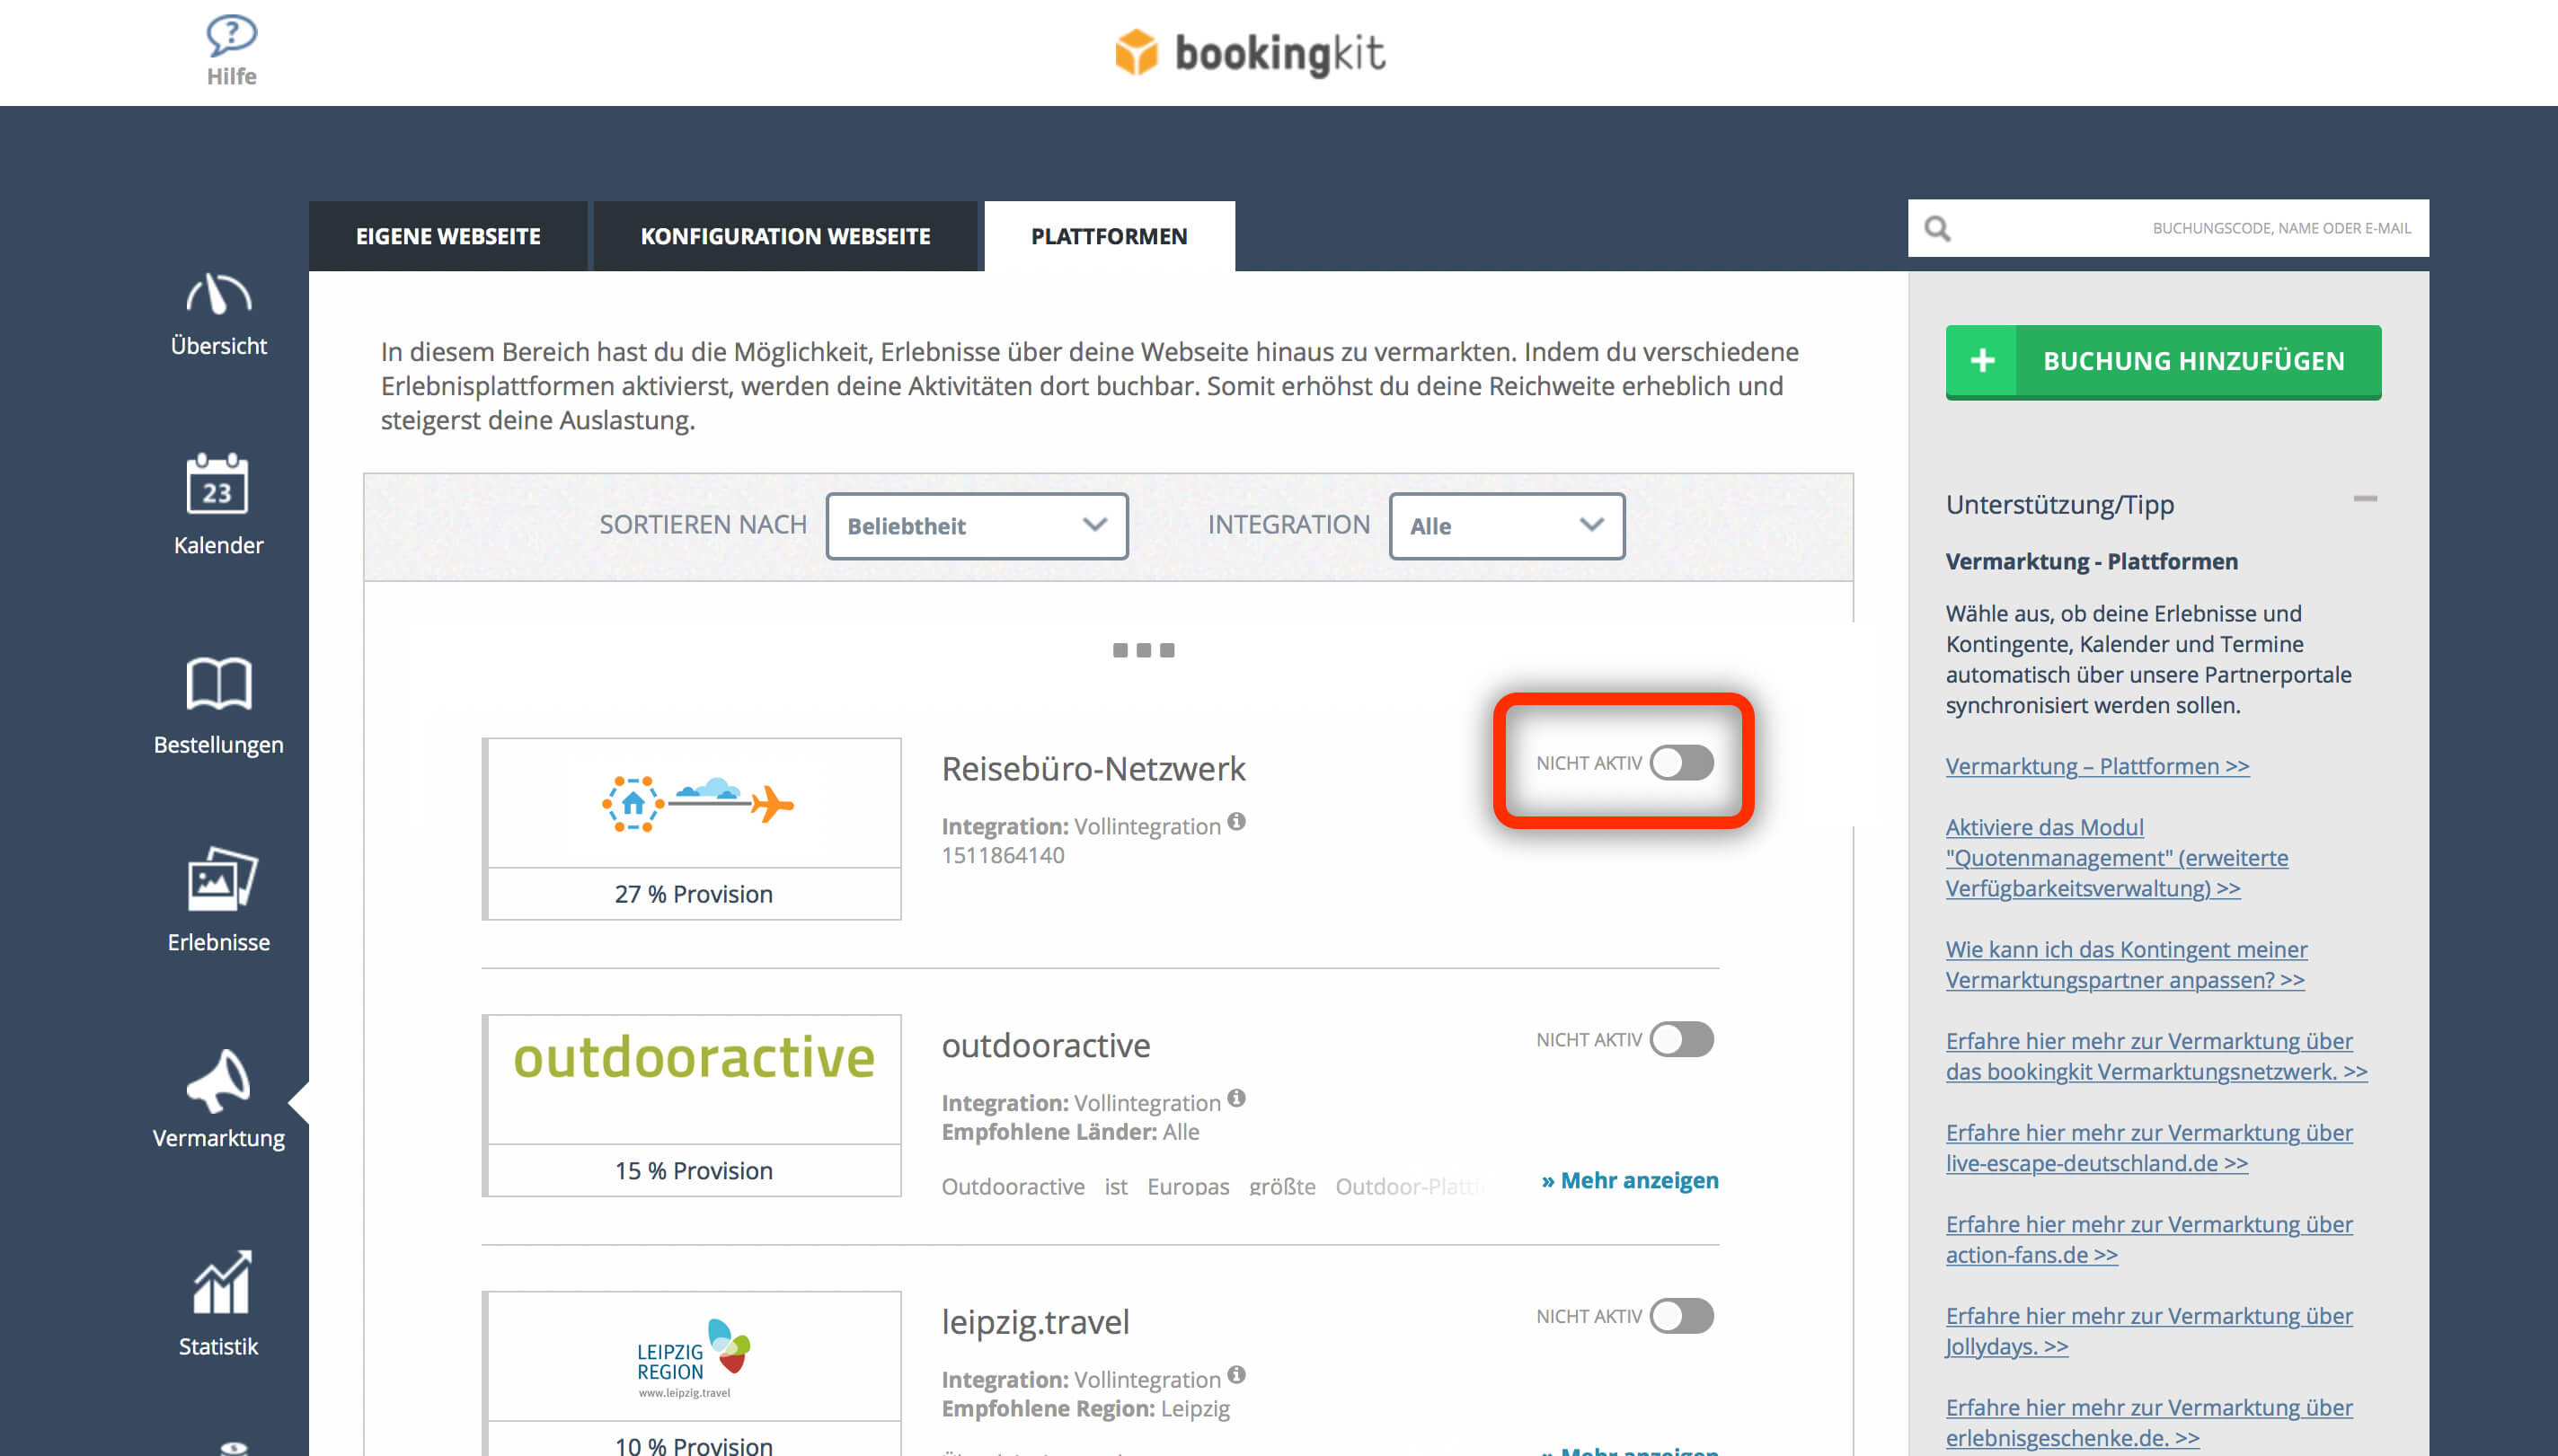 bookingkit-Vermarktung-Plattformen-Reisebuero